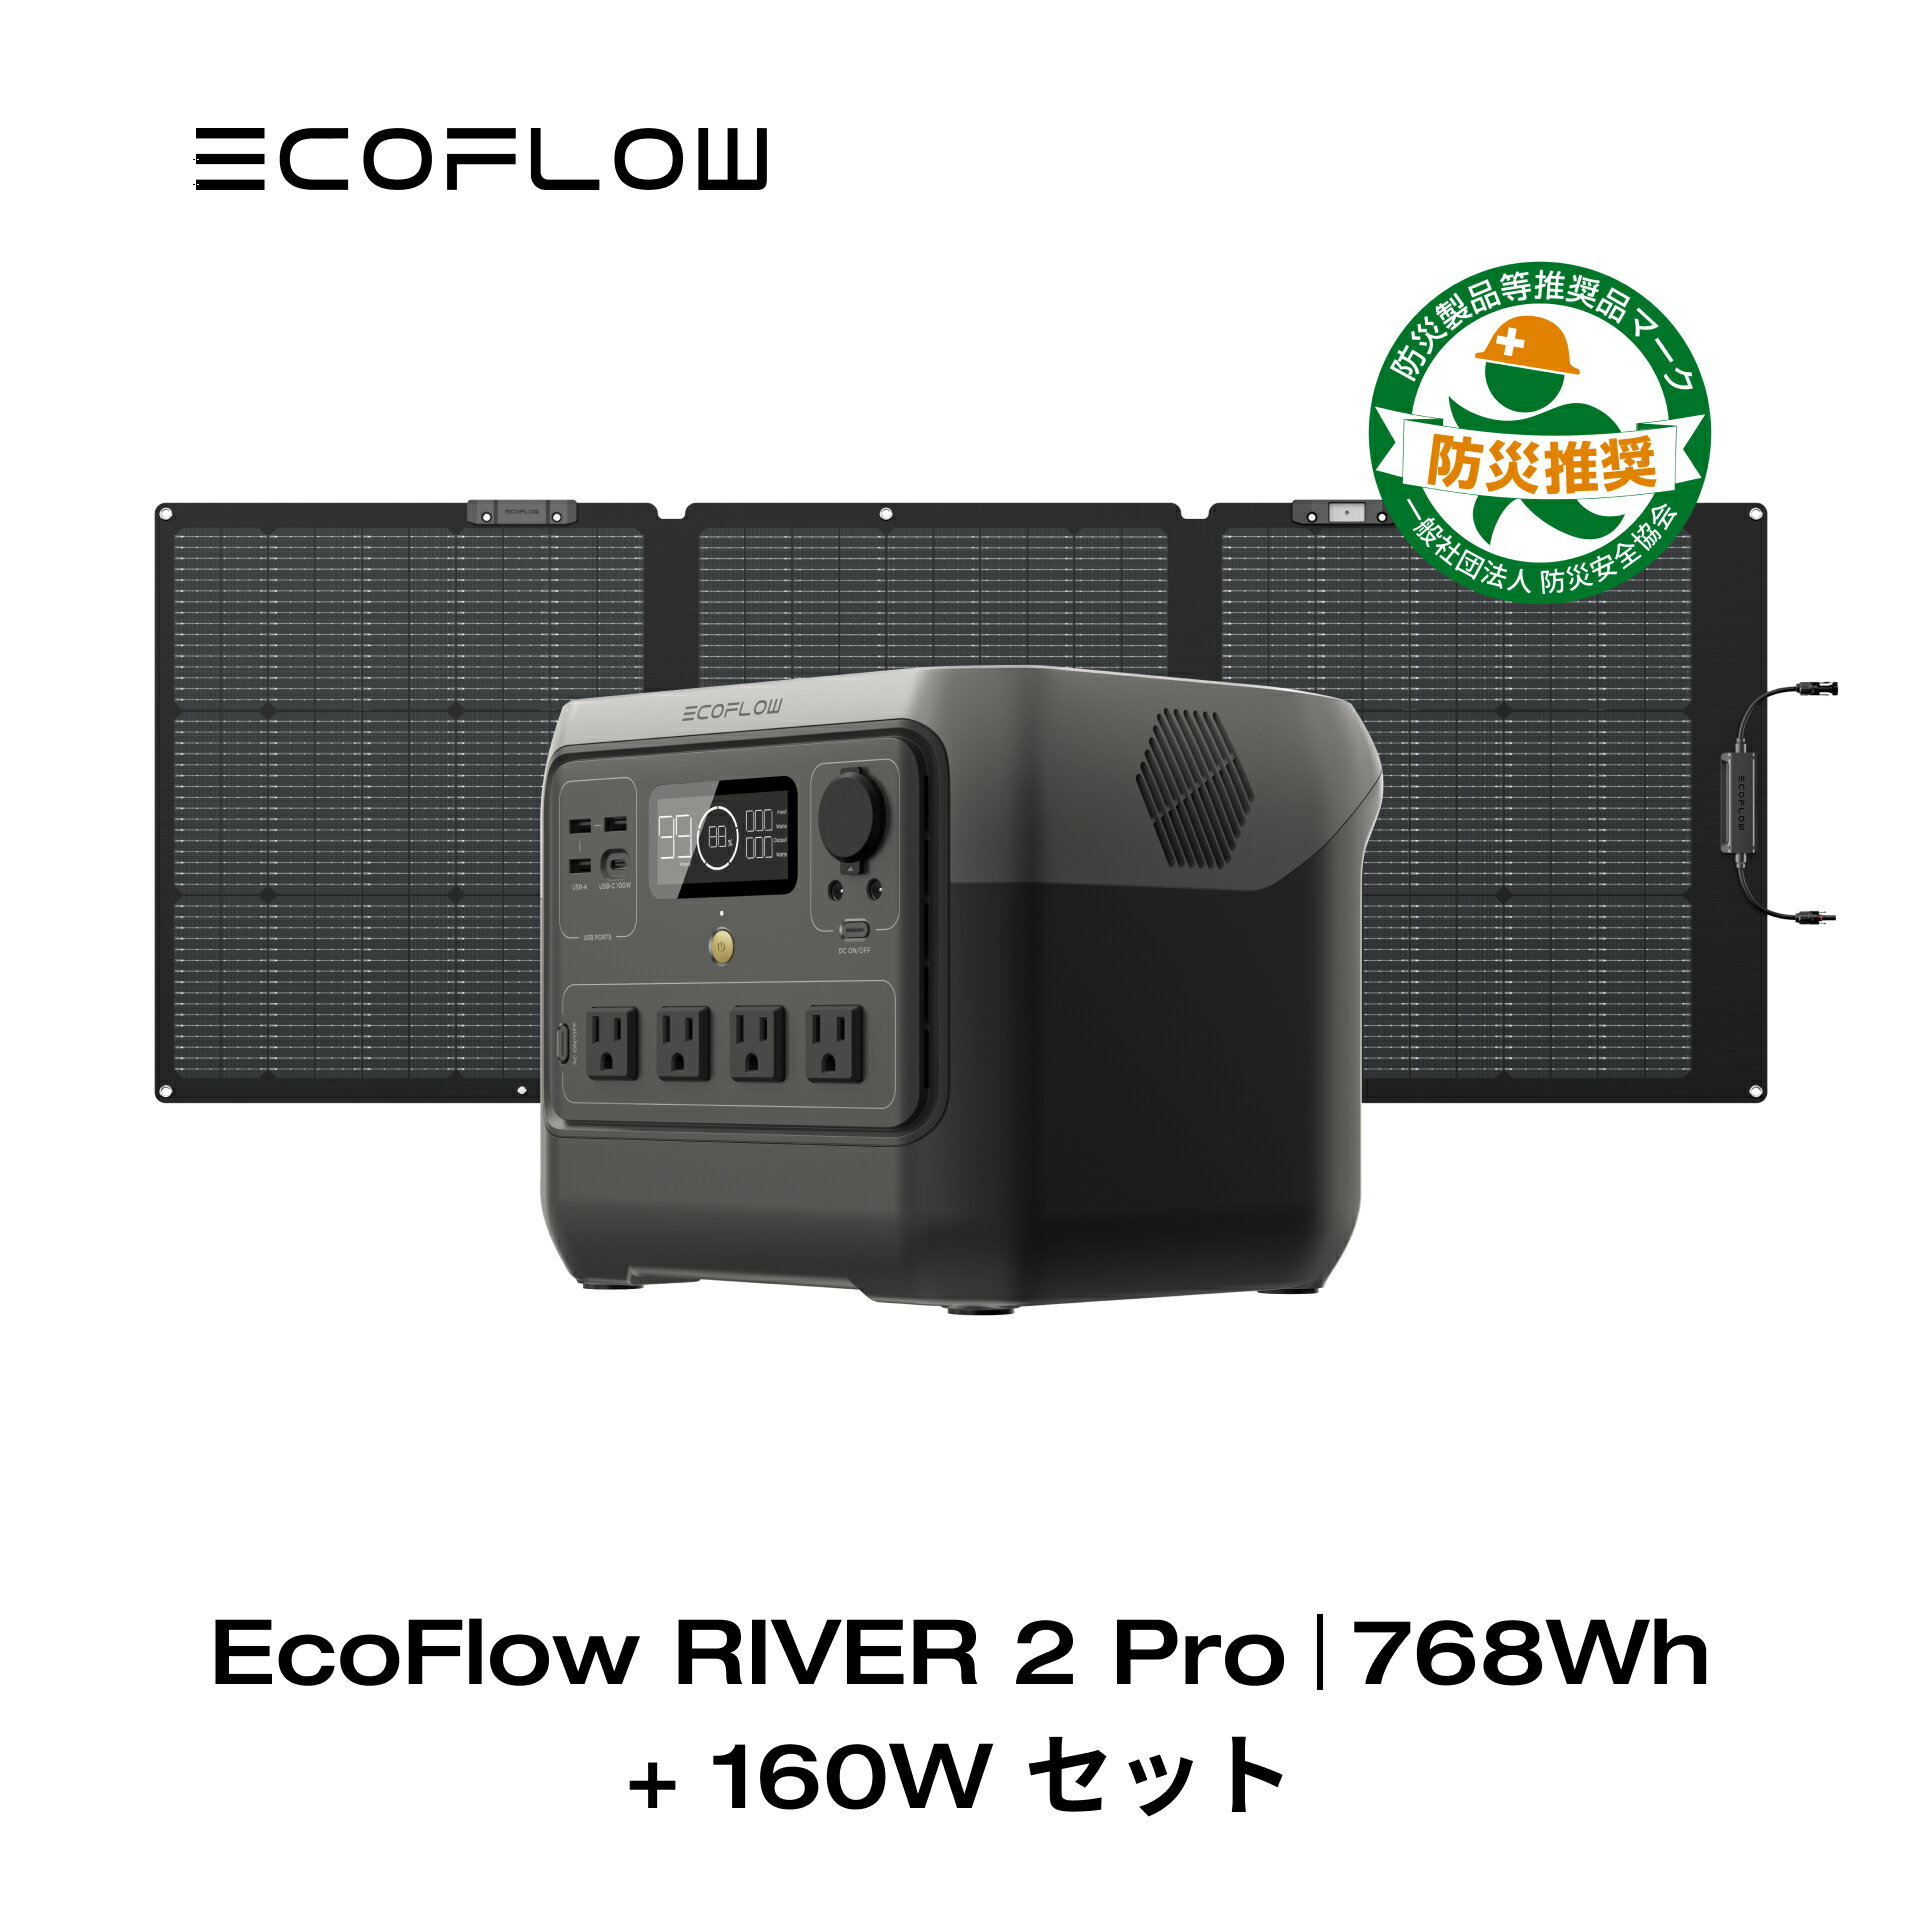 EcoFlow RIVER 2 Pro 768Wh 160W ポータブル電源 ソーラーパネル セット 蓄電池 発電機 ポータブルバッテリー 急速充電 アプリ対応 車中泊 非常用電源 停電 台風 防災グッズ アウトドア キャンプ エコフロー